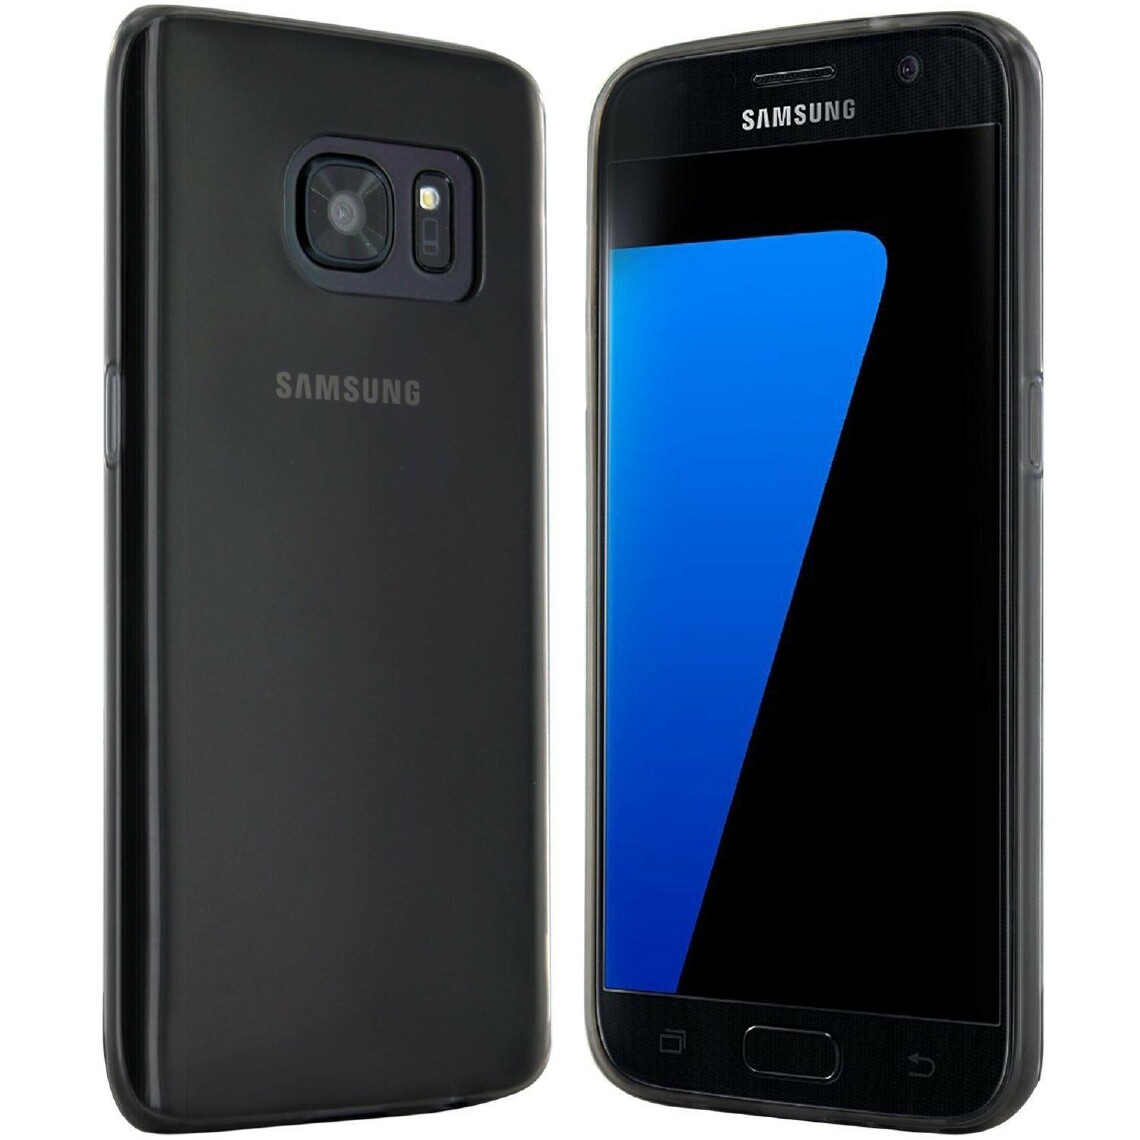 Samsung - SAMSUNG Galaxy S7 SMG930F SAGASMG - Smartphone Android